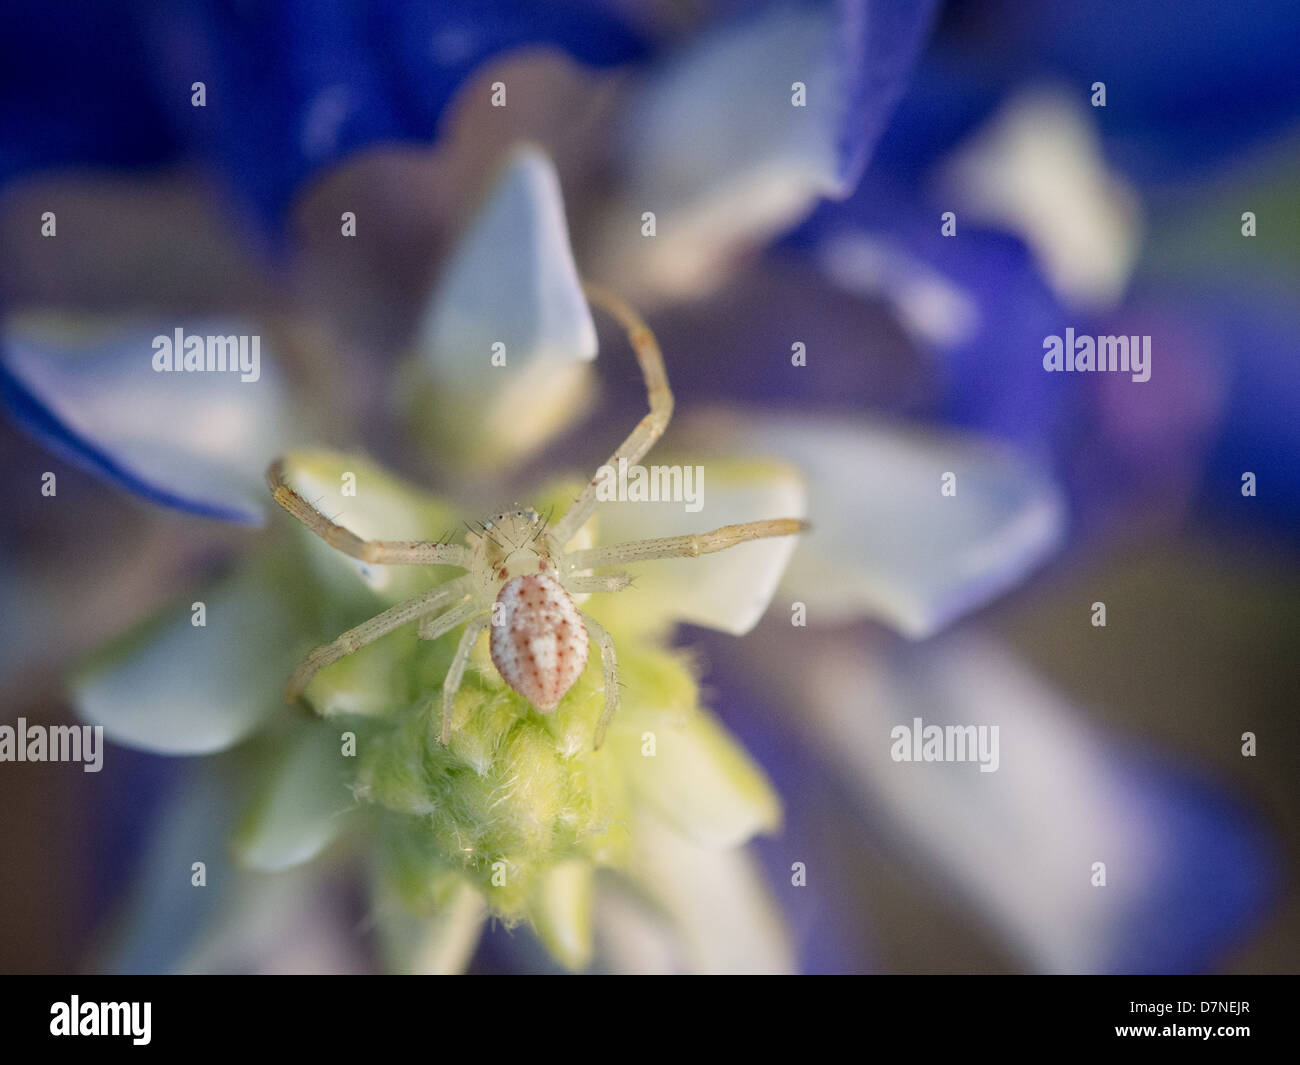 Garden Spider On A Bluebonnet Flower In Austin Texas Stock Photo